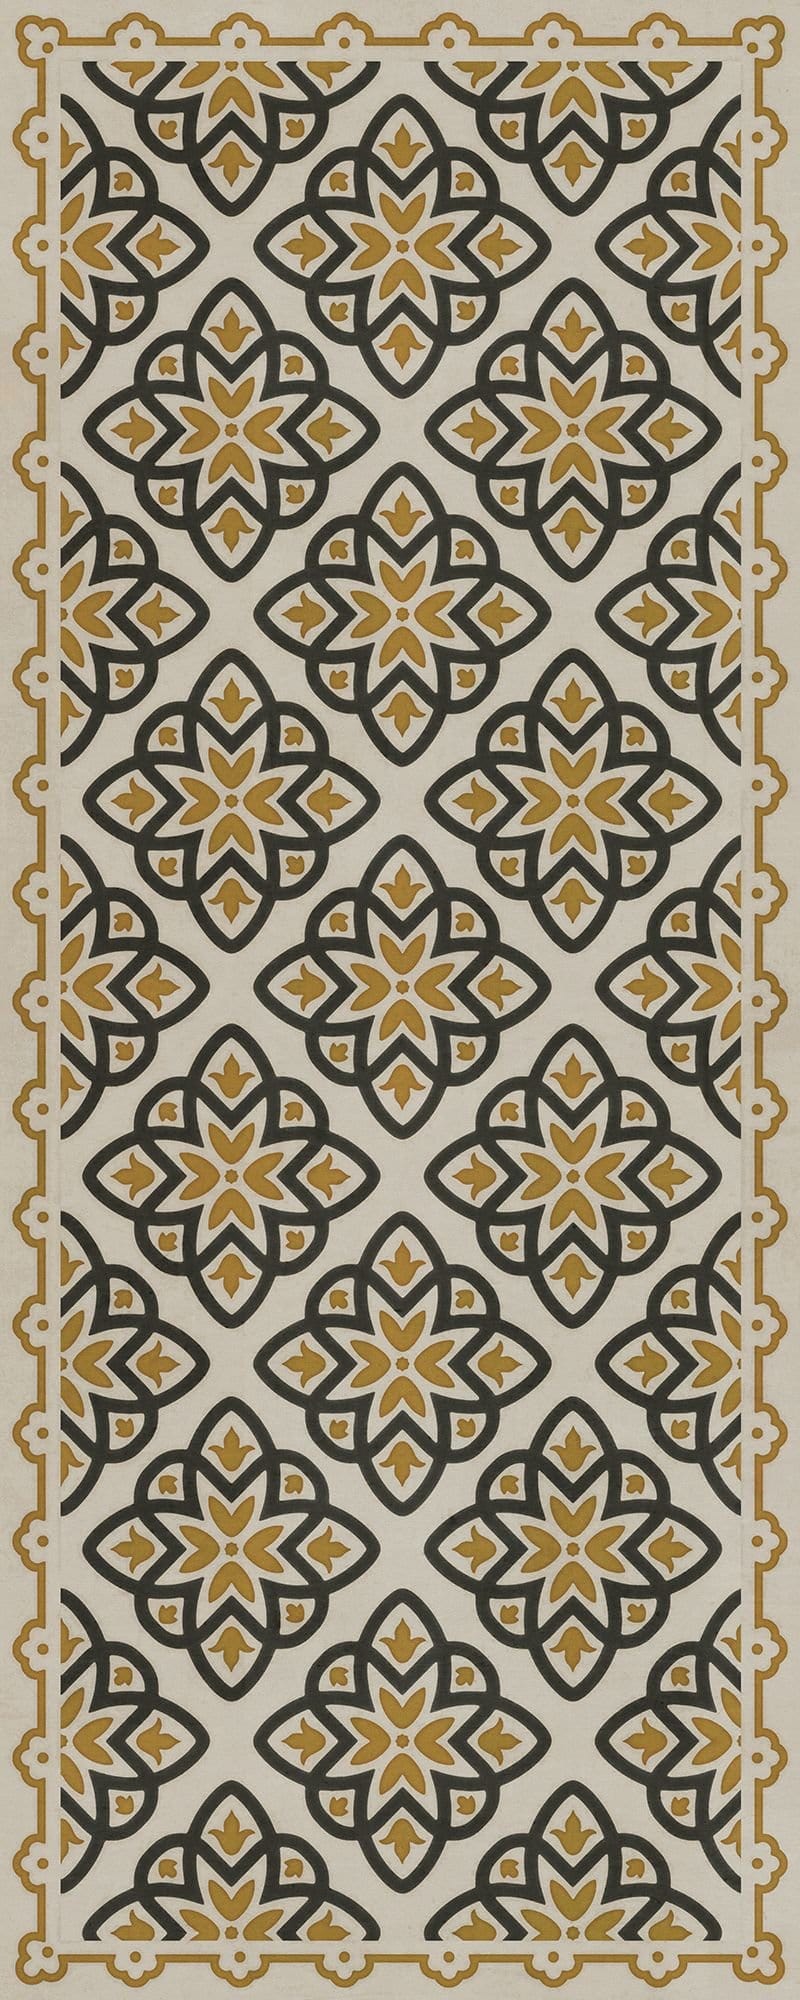 Pattern 45